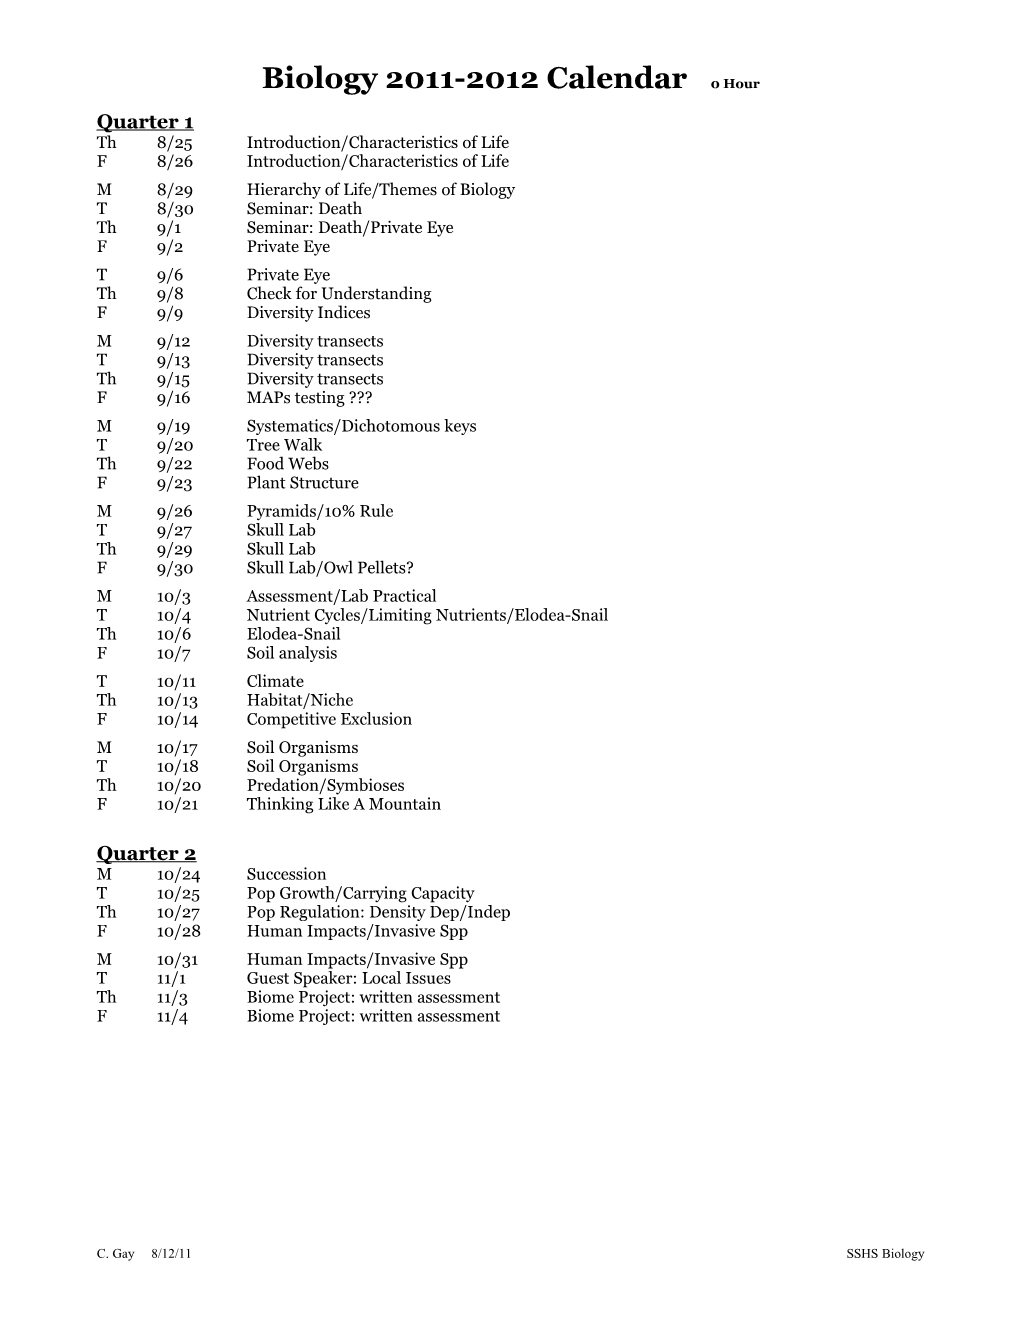 AP Biology 2006-7 Calendar